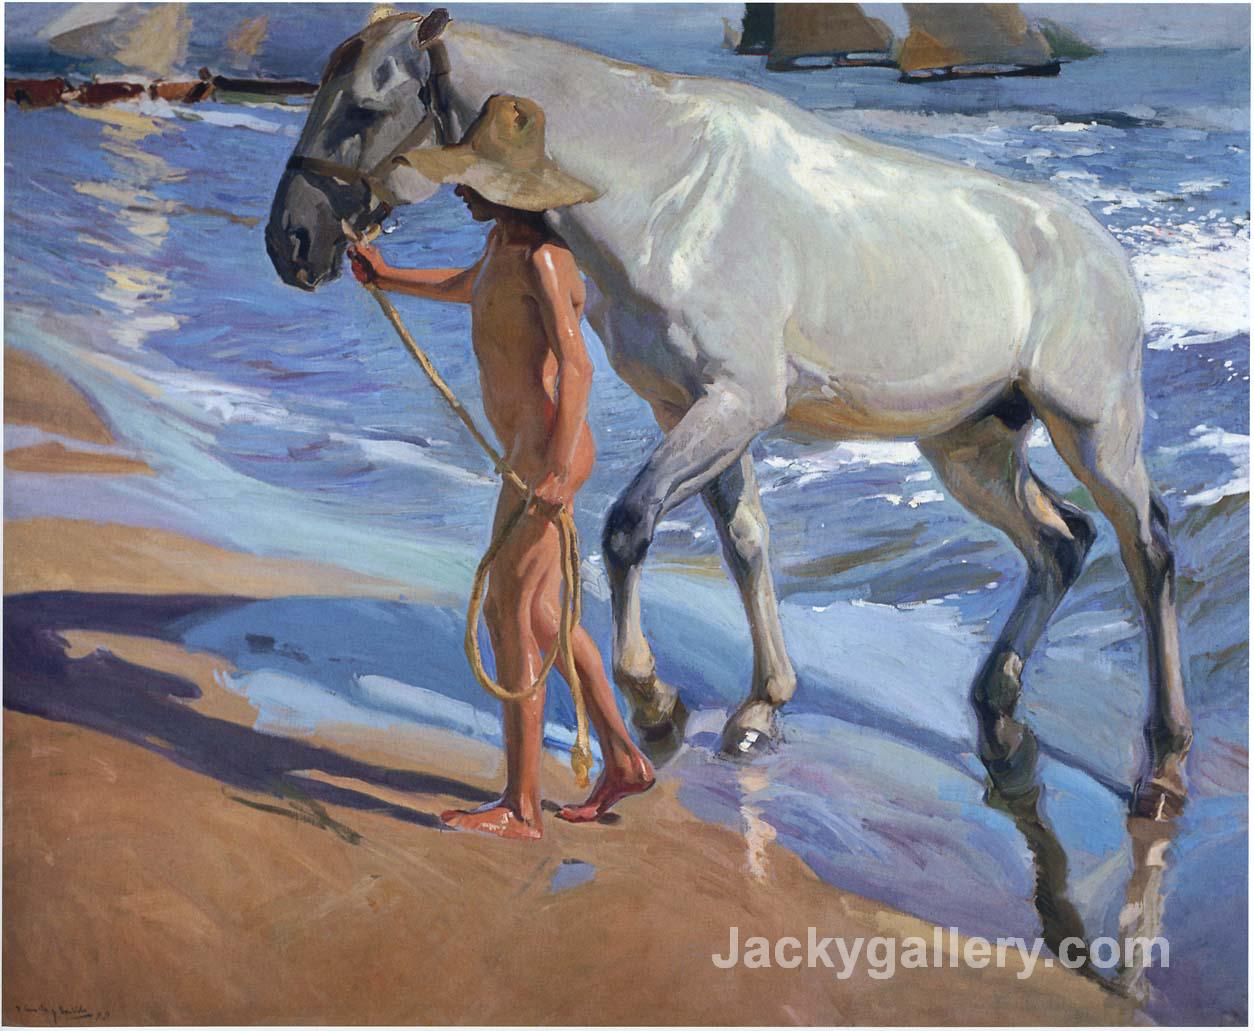 Washing the Horse by Joaquin Sorolla y Bastida paintings reproduction